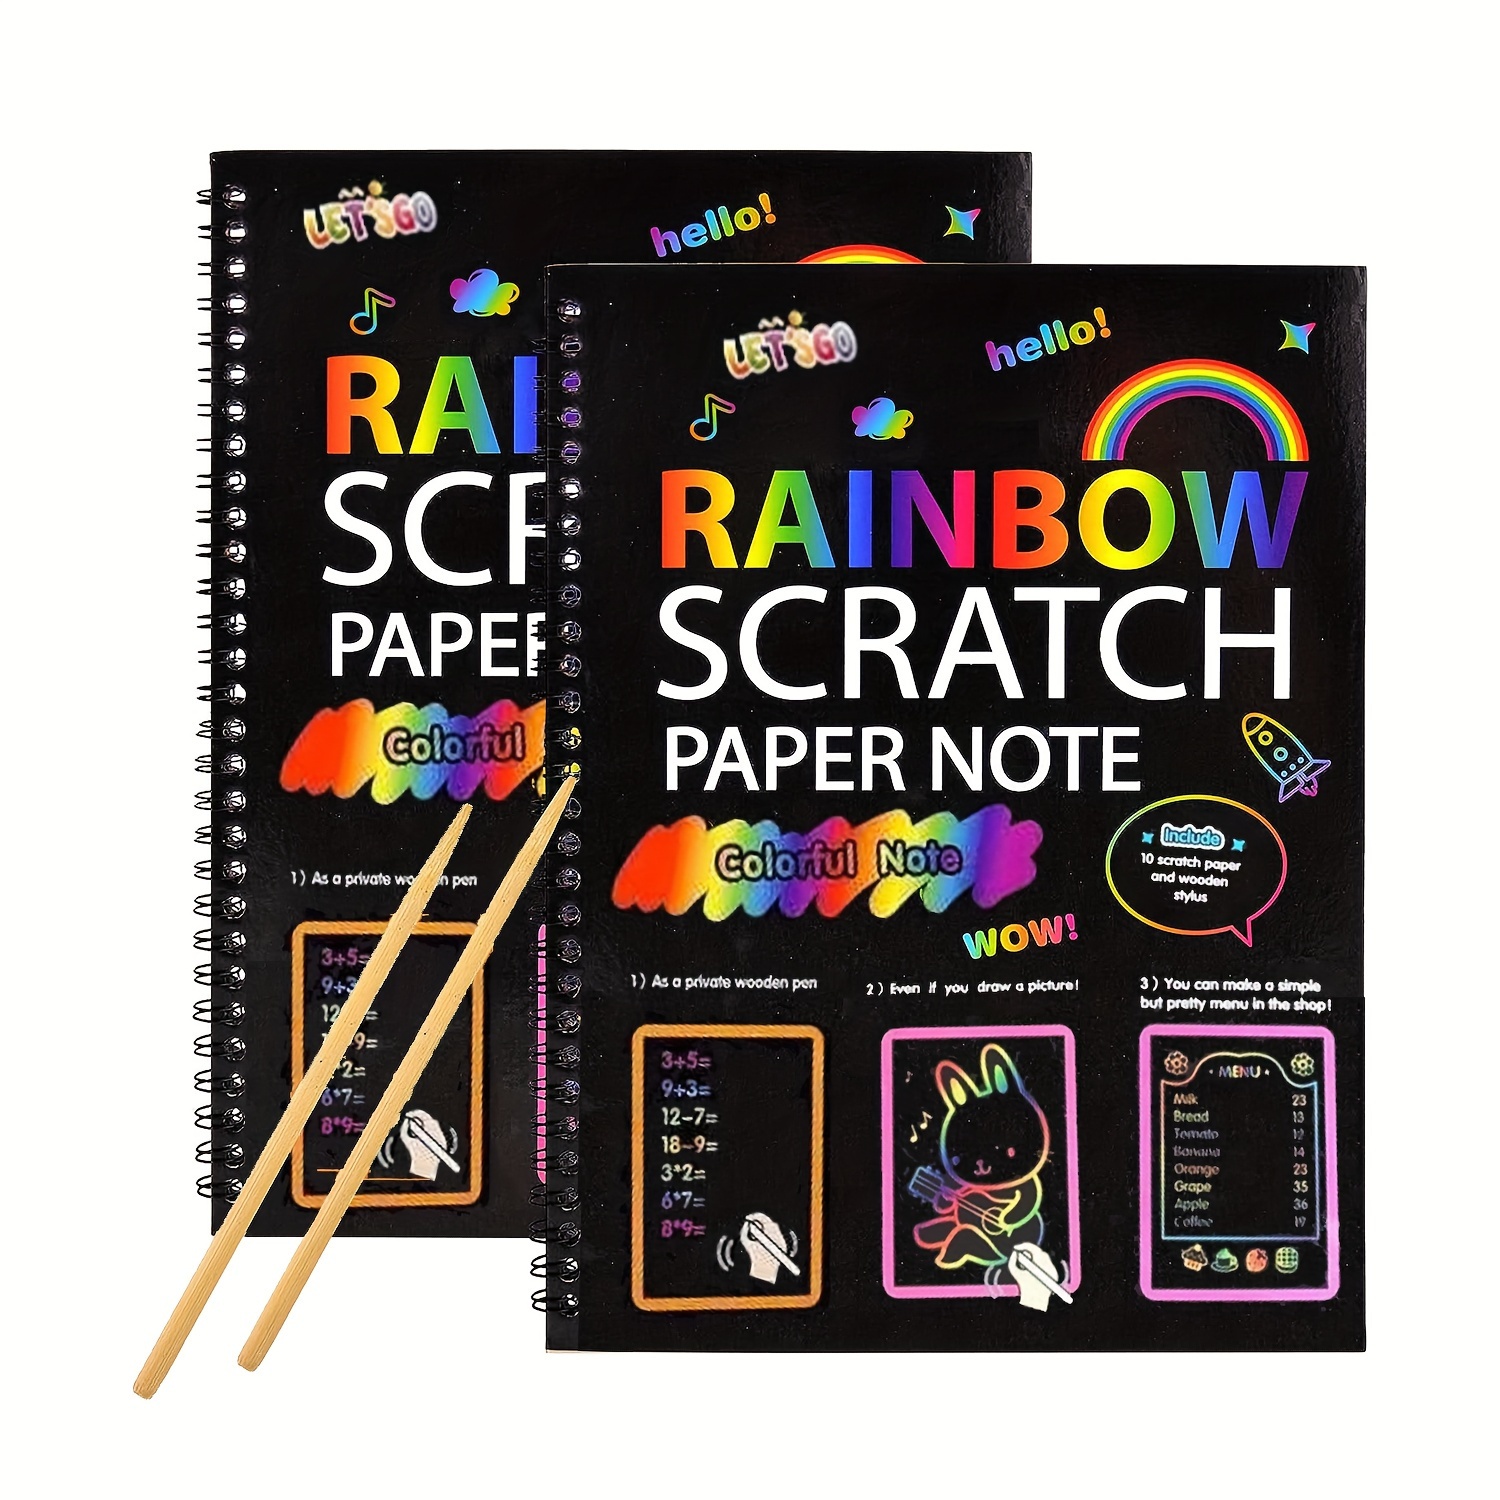 Scratch Art Craft Notes, 100 Rainbow Scratch Paper Art Stocking